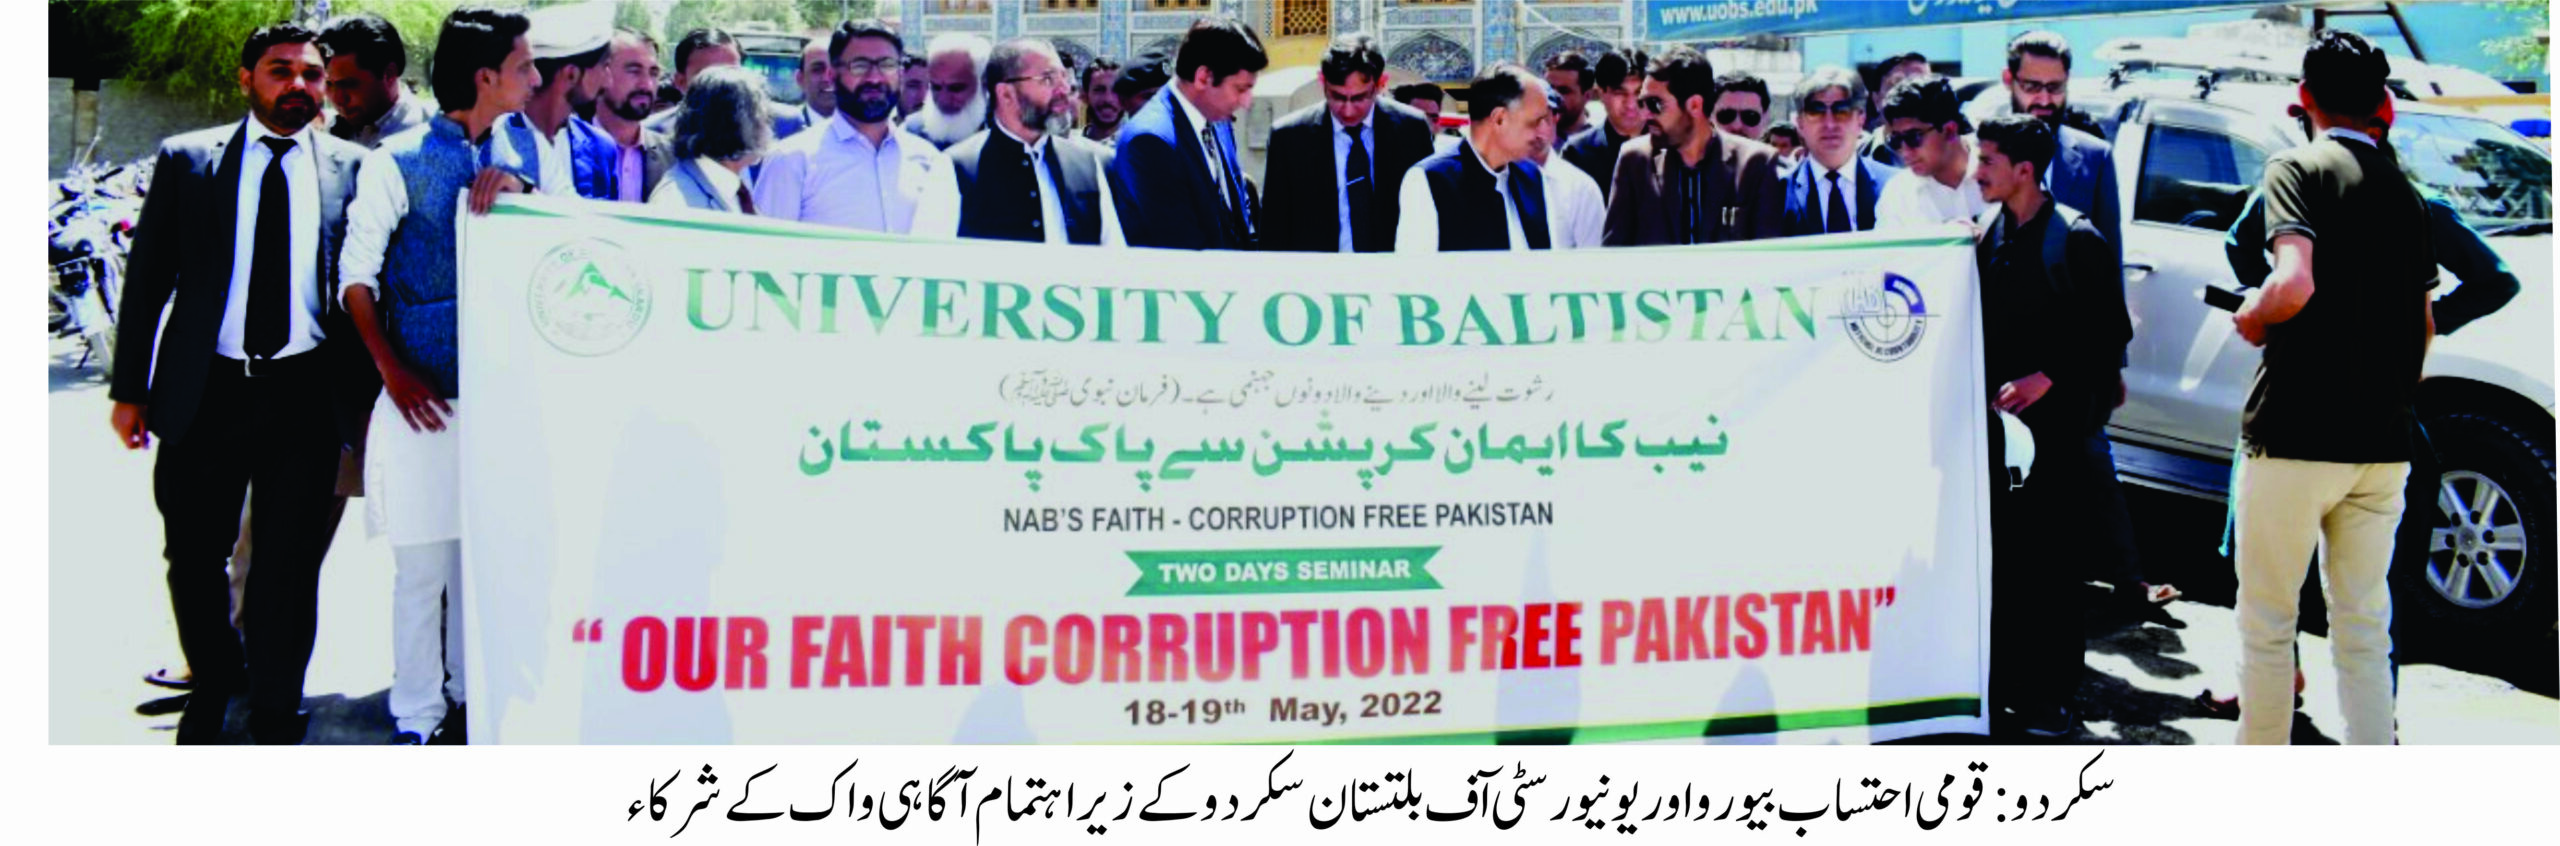 یونیورسٹی آف بلتستان اور قومی احتساب بیورو کے زیر اہتمام آگاہی واک اور تقریب اک انعقاد